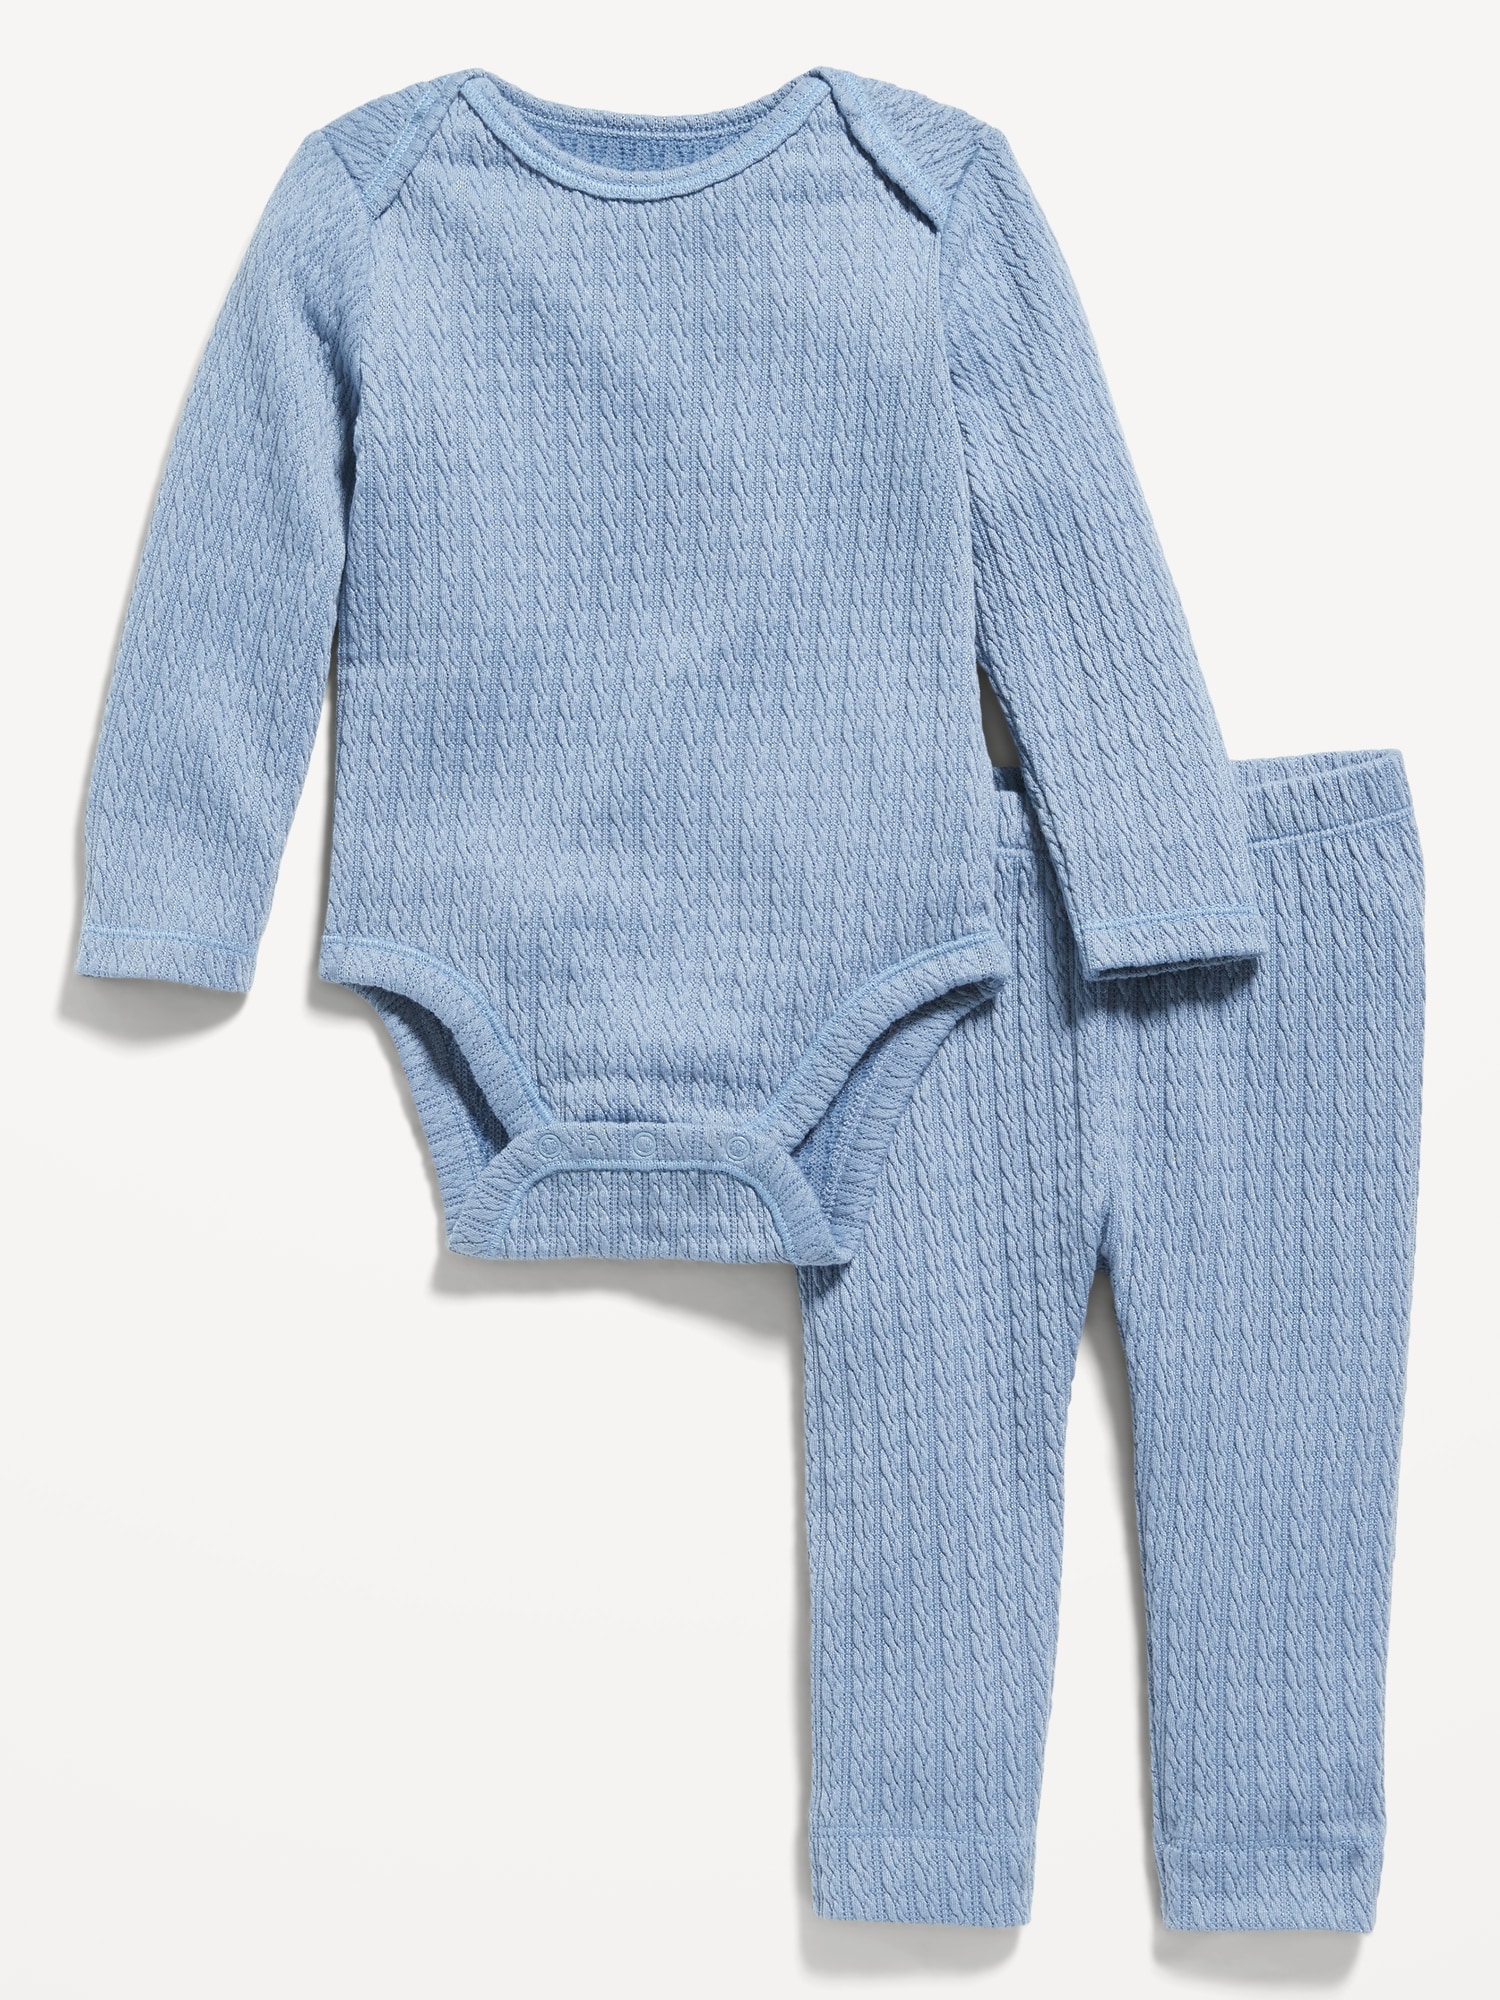 Unisex Jacquard-Knit Bodysuit & Pants Set for Baby